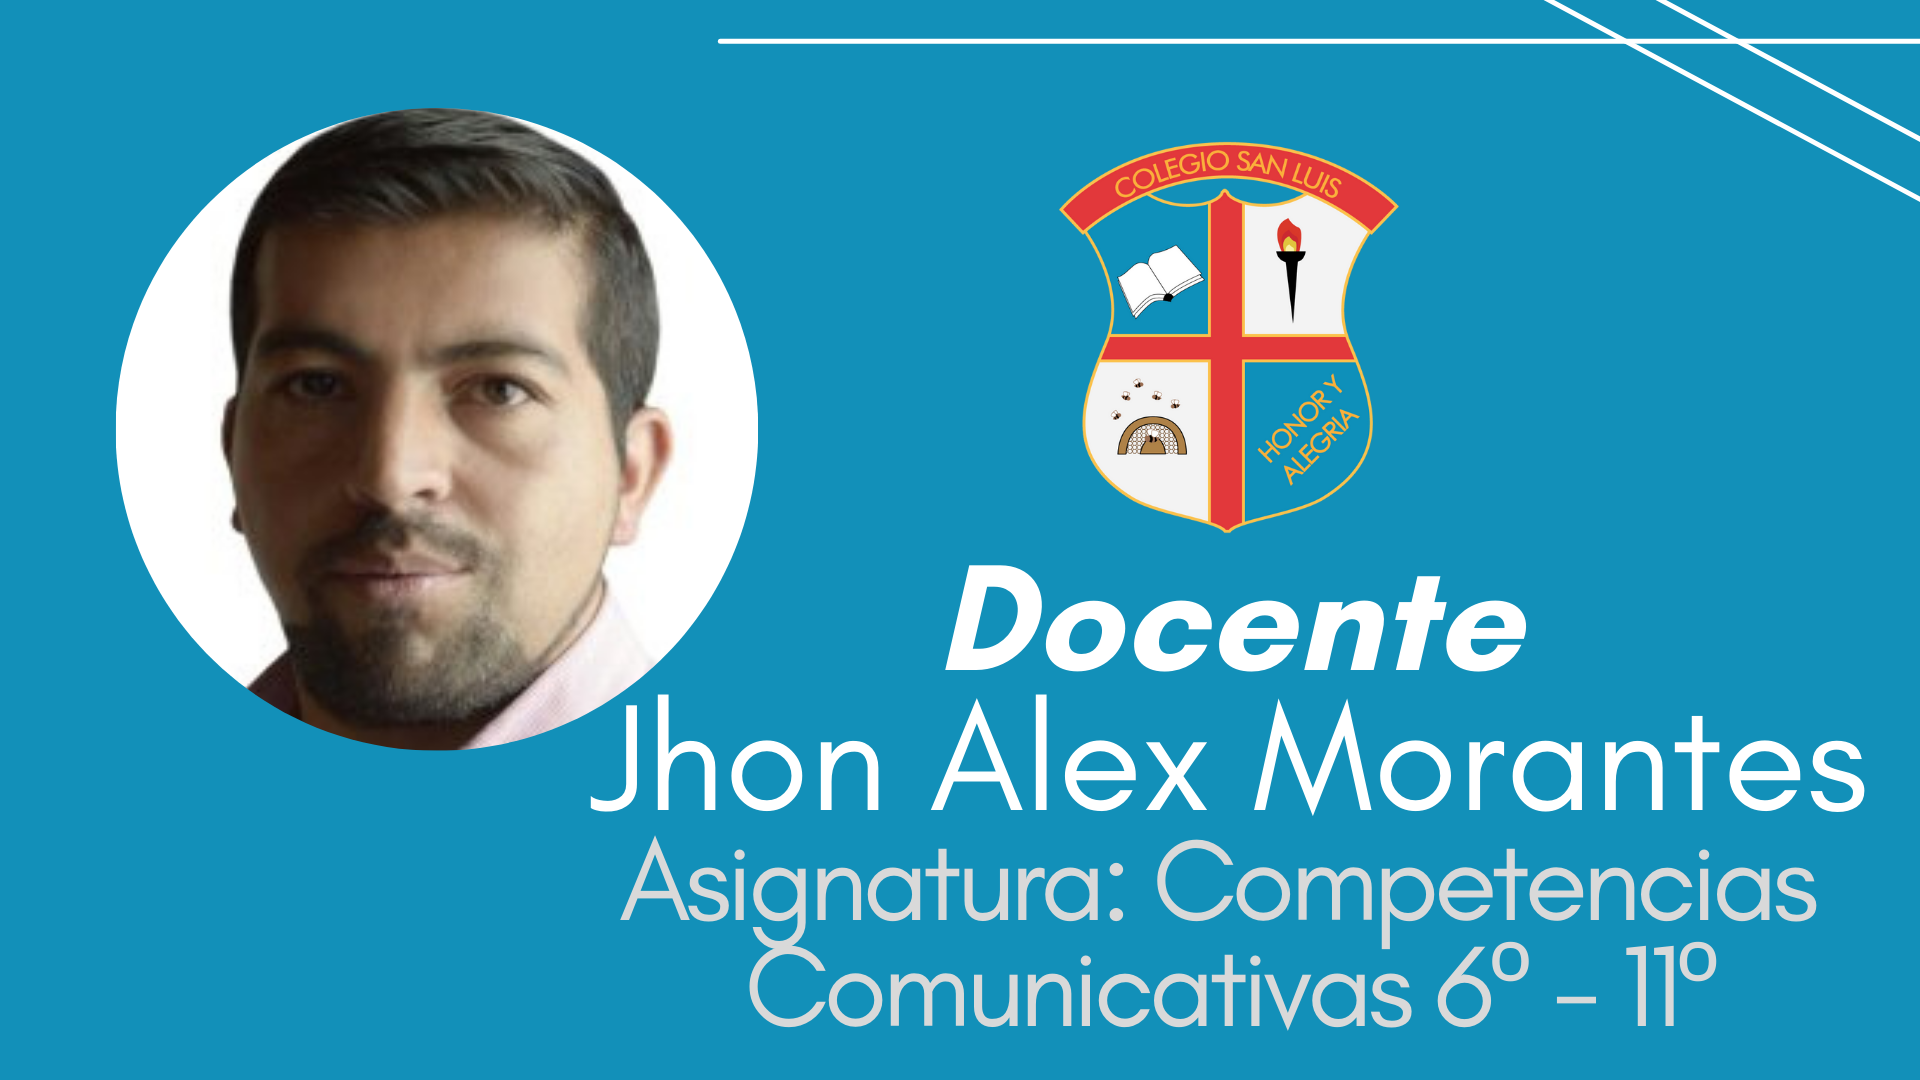 Jhon Alex Morantes